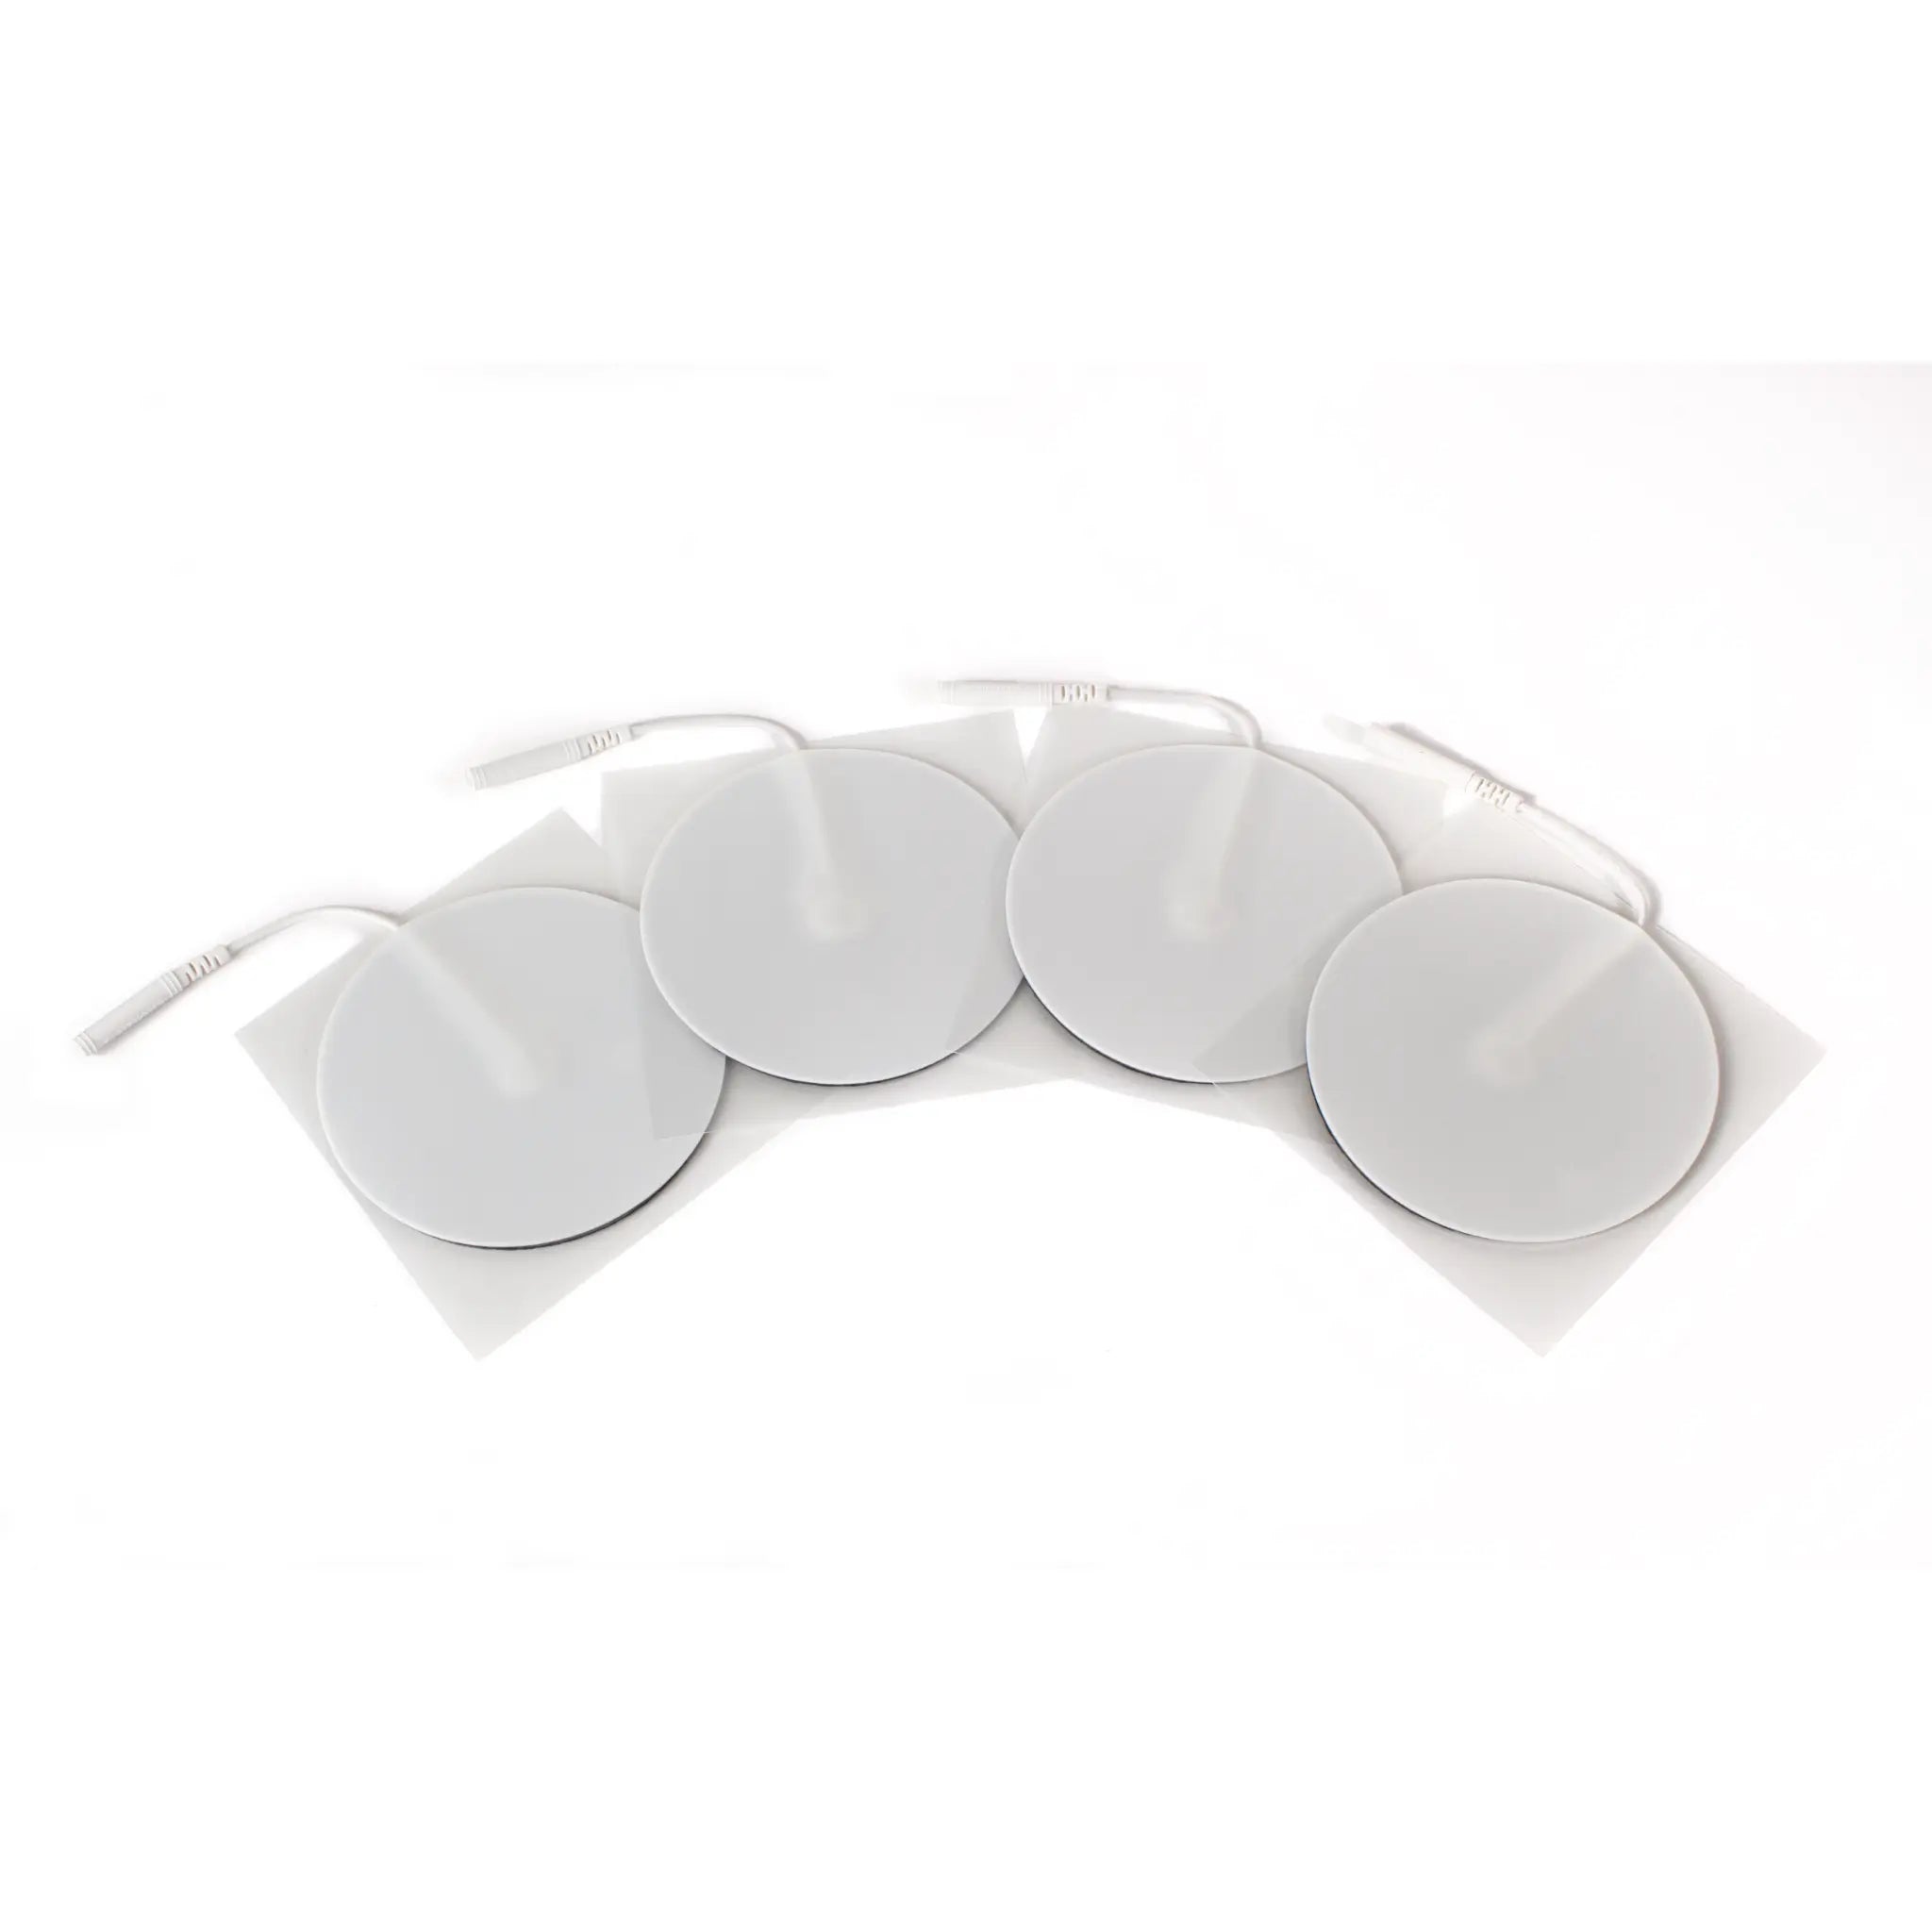 photo of 4 round white foam conductive pads